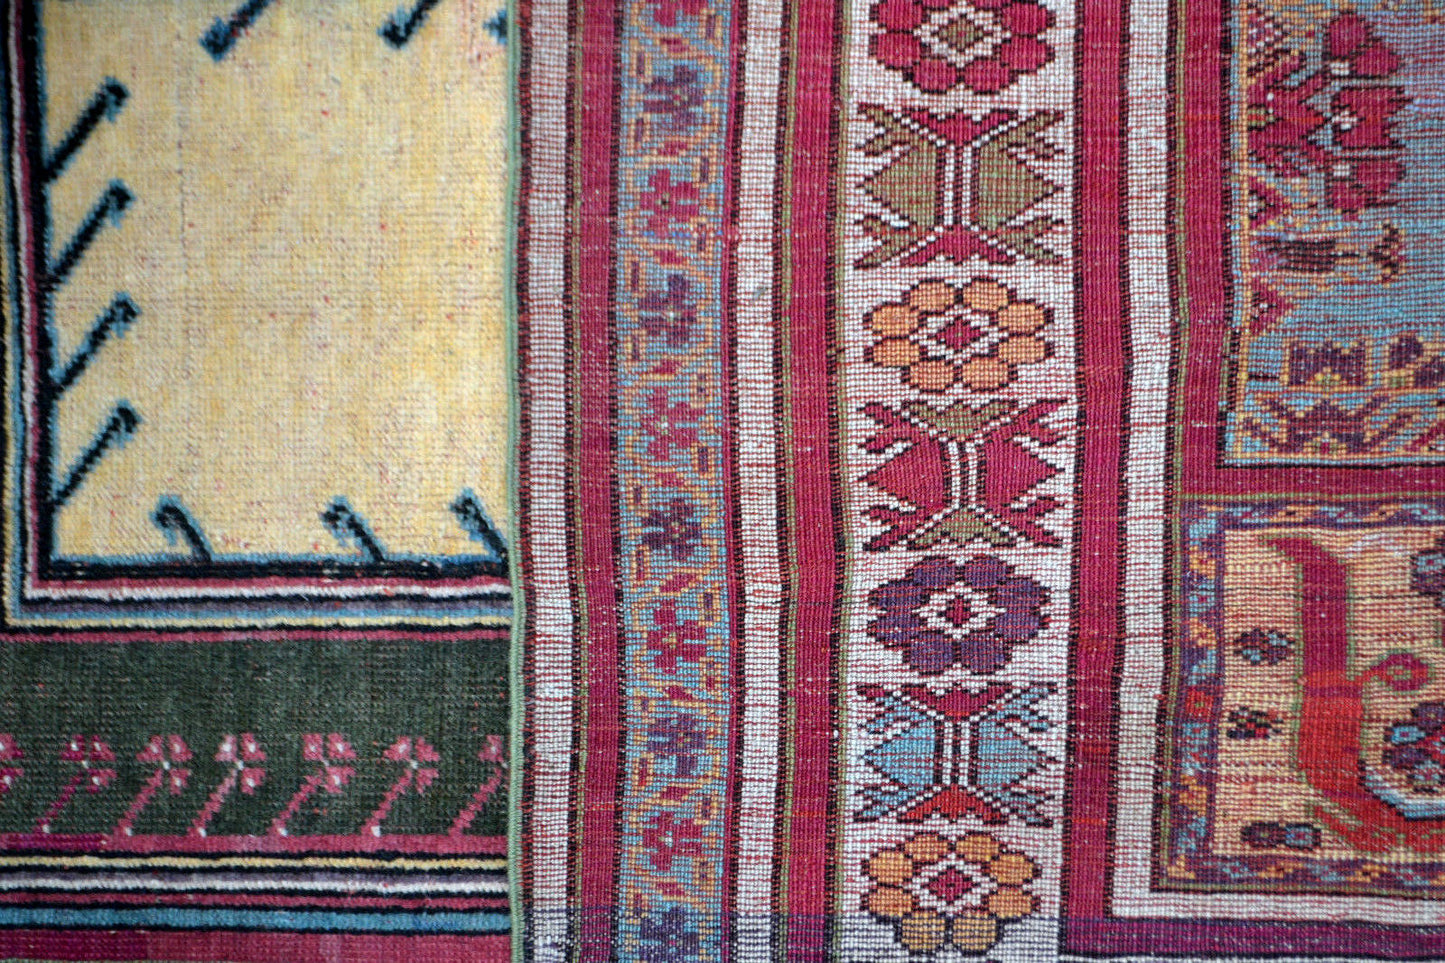 Handmade antique Turkish Kersheir rug 3.9' x 5.9' (120cm x 180cm) 1880s - 1P25